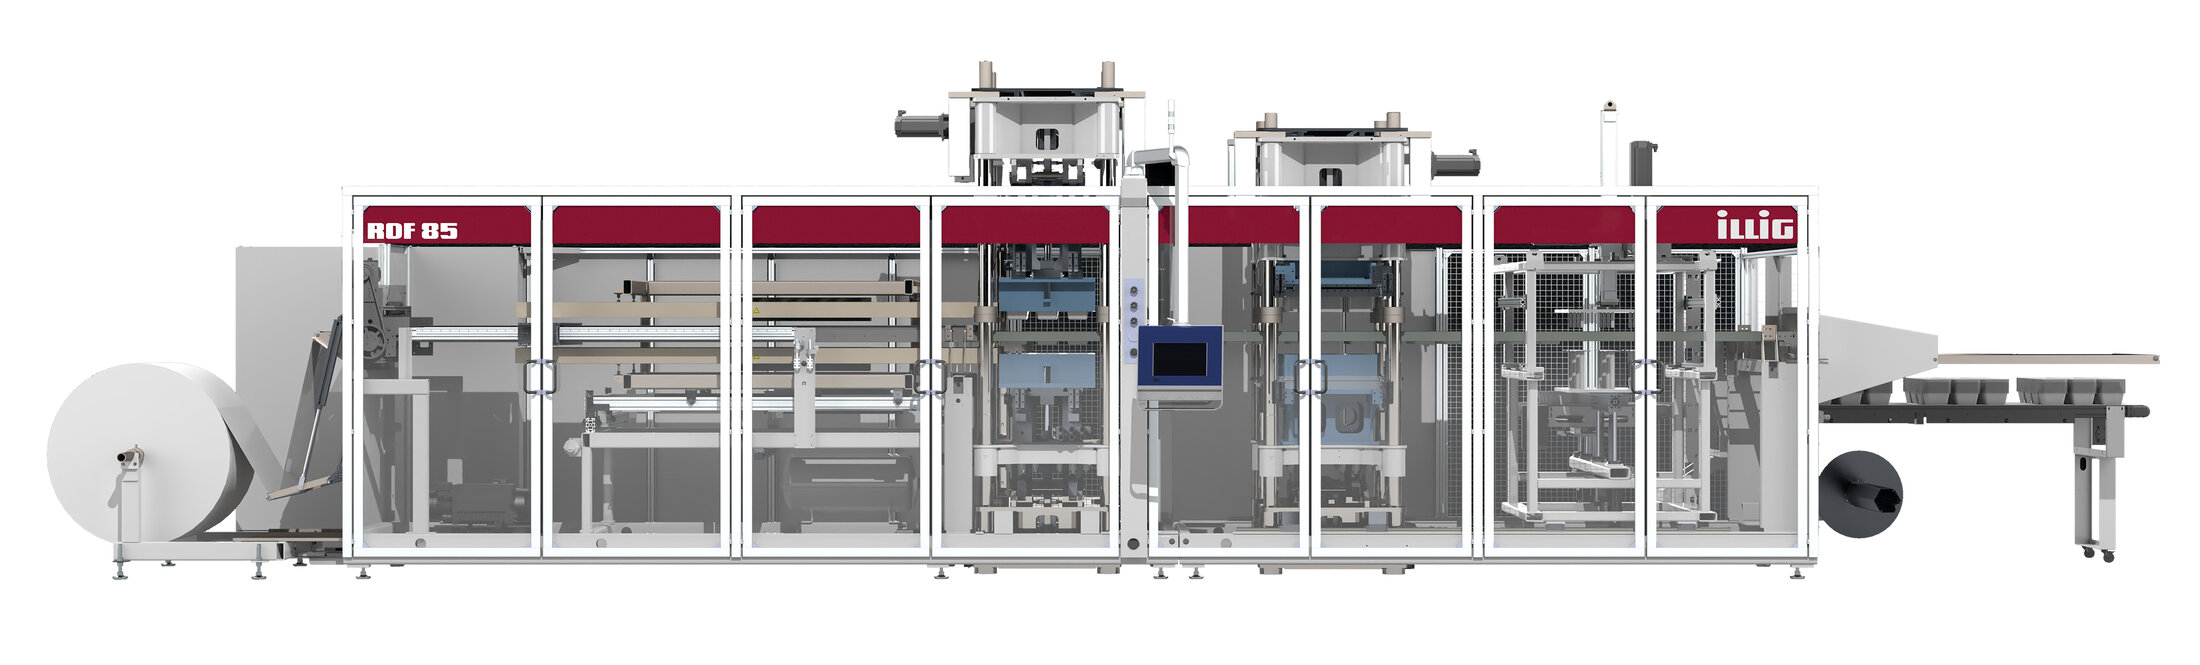 New ILLIG RedLine RDF 85 thermoforming system at Chinaplas 2021. | © ILLIG Maschinenbau GmbH